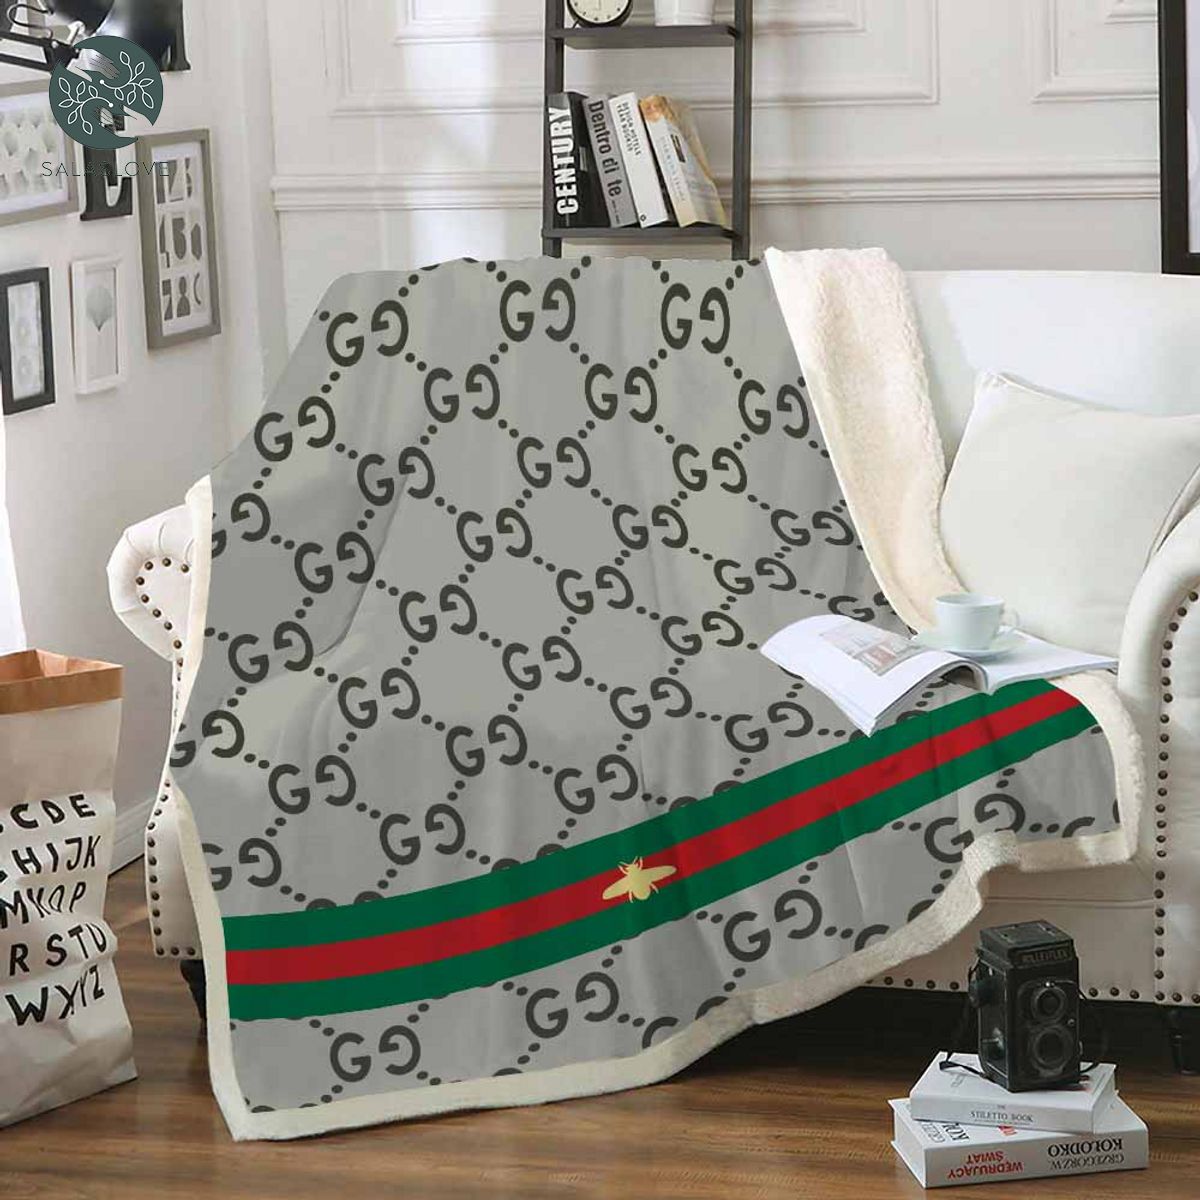 Gucci Blanket Luxruy Bedding Bedroom Blanket Air Conditioning Blanket